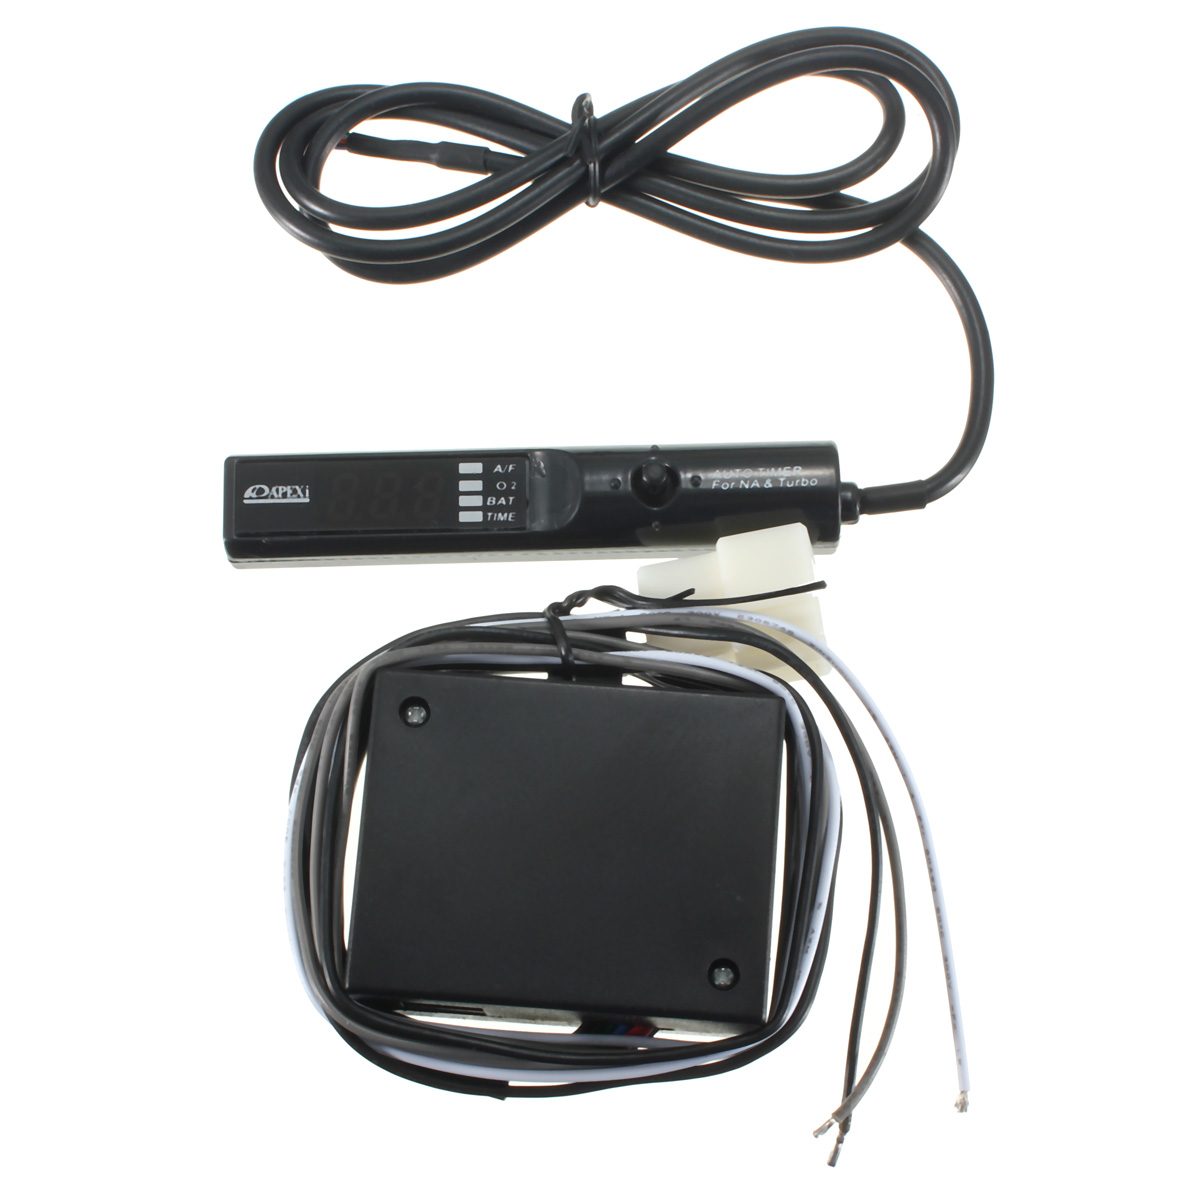 Digital-LCD-Universal-Auto-Turbo-Timer-for-Turbo--NA-Black-Pen-Control-RedWhite-LED-993352-4